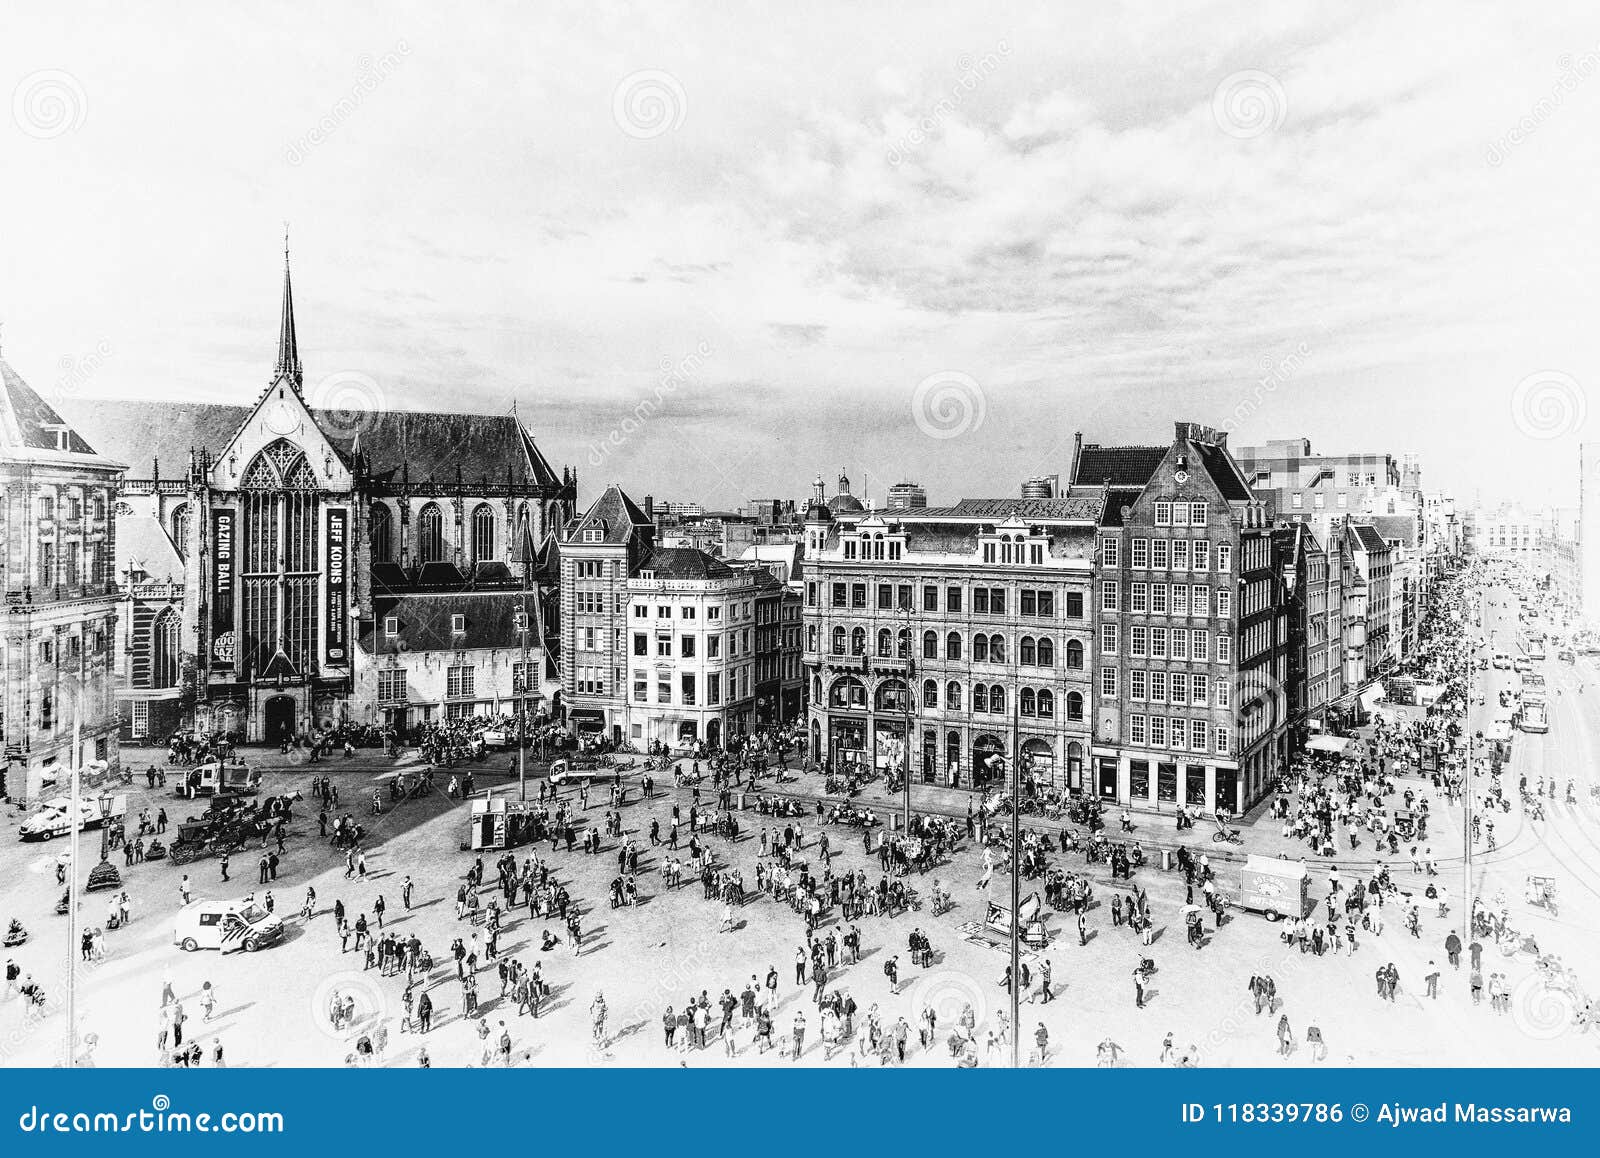 goedkeuren Ongeldig Worden Dam Square , Amsterdam , Vintage Stock Photo - Image of square, marken:  118339786